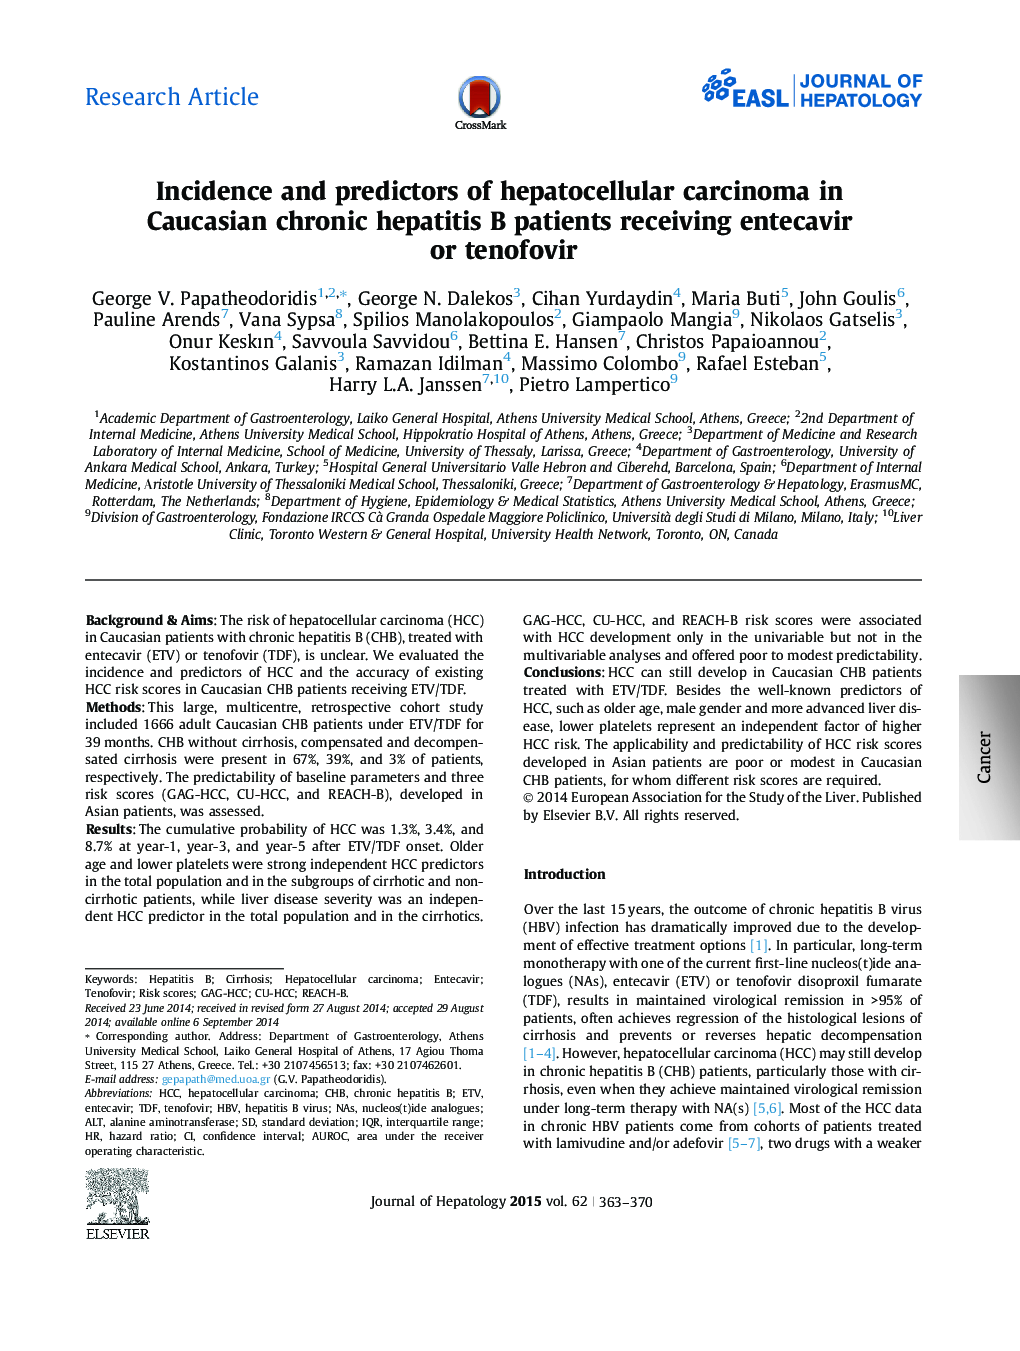 Research ArticleIncidence and predictors of hepatocellular carcinoma in Caucasian chronic hepatitis B patients receiving entecavir or tenofovir